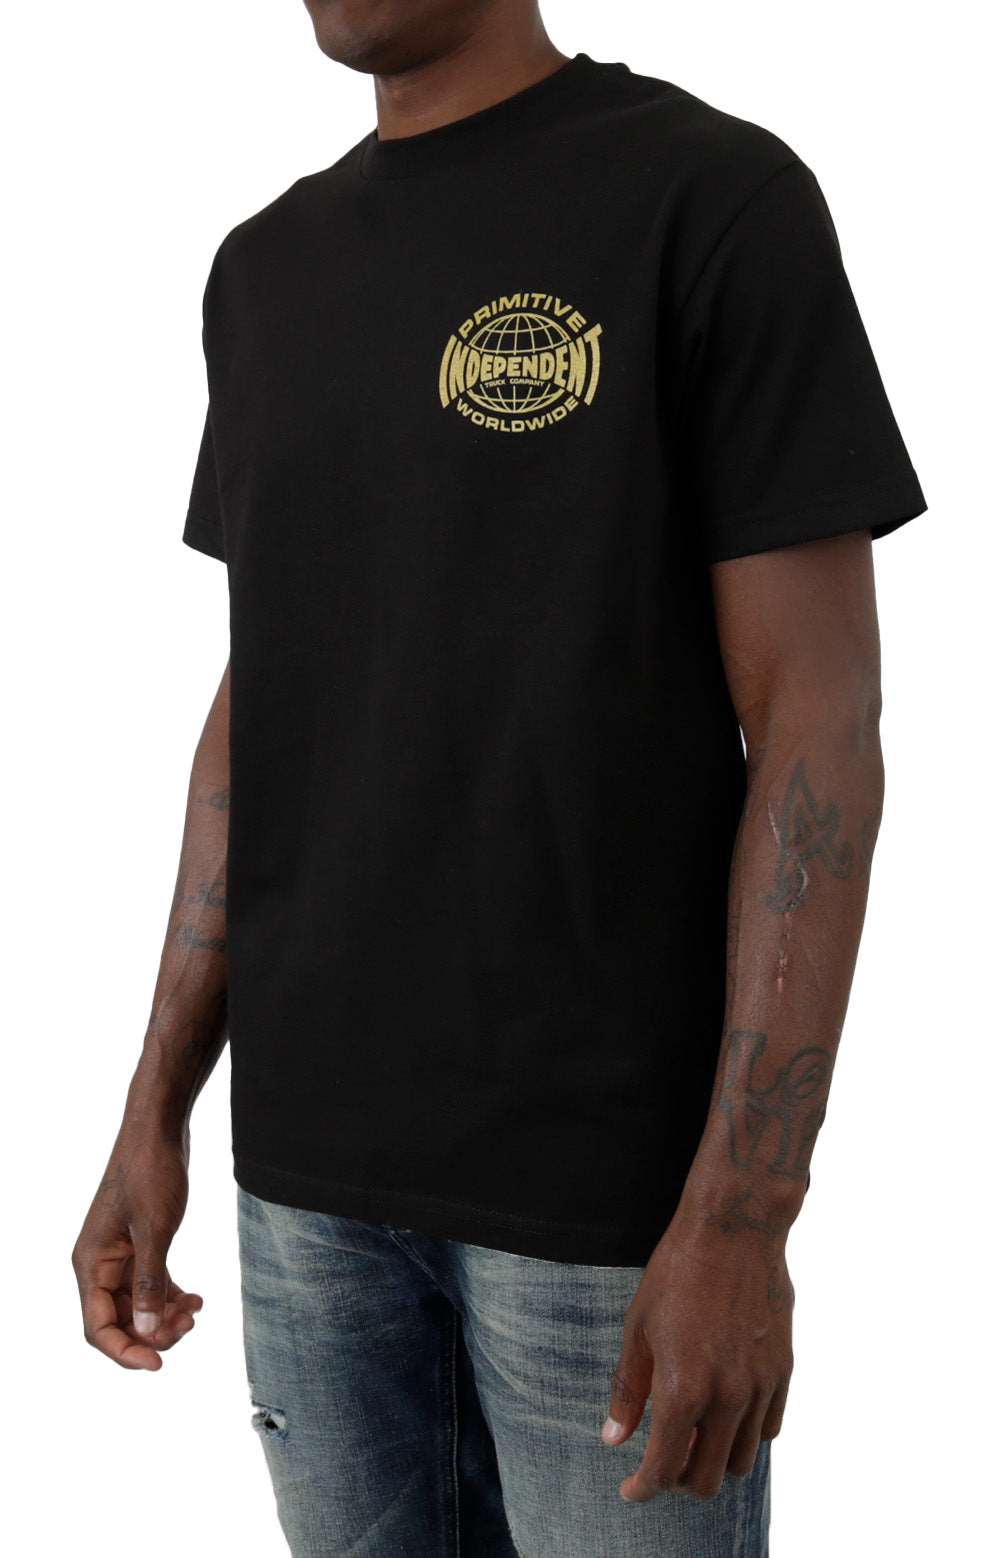 x Independent Global T-Shirt - Black